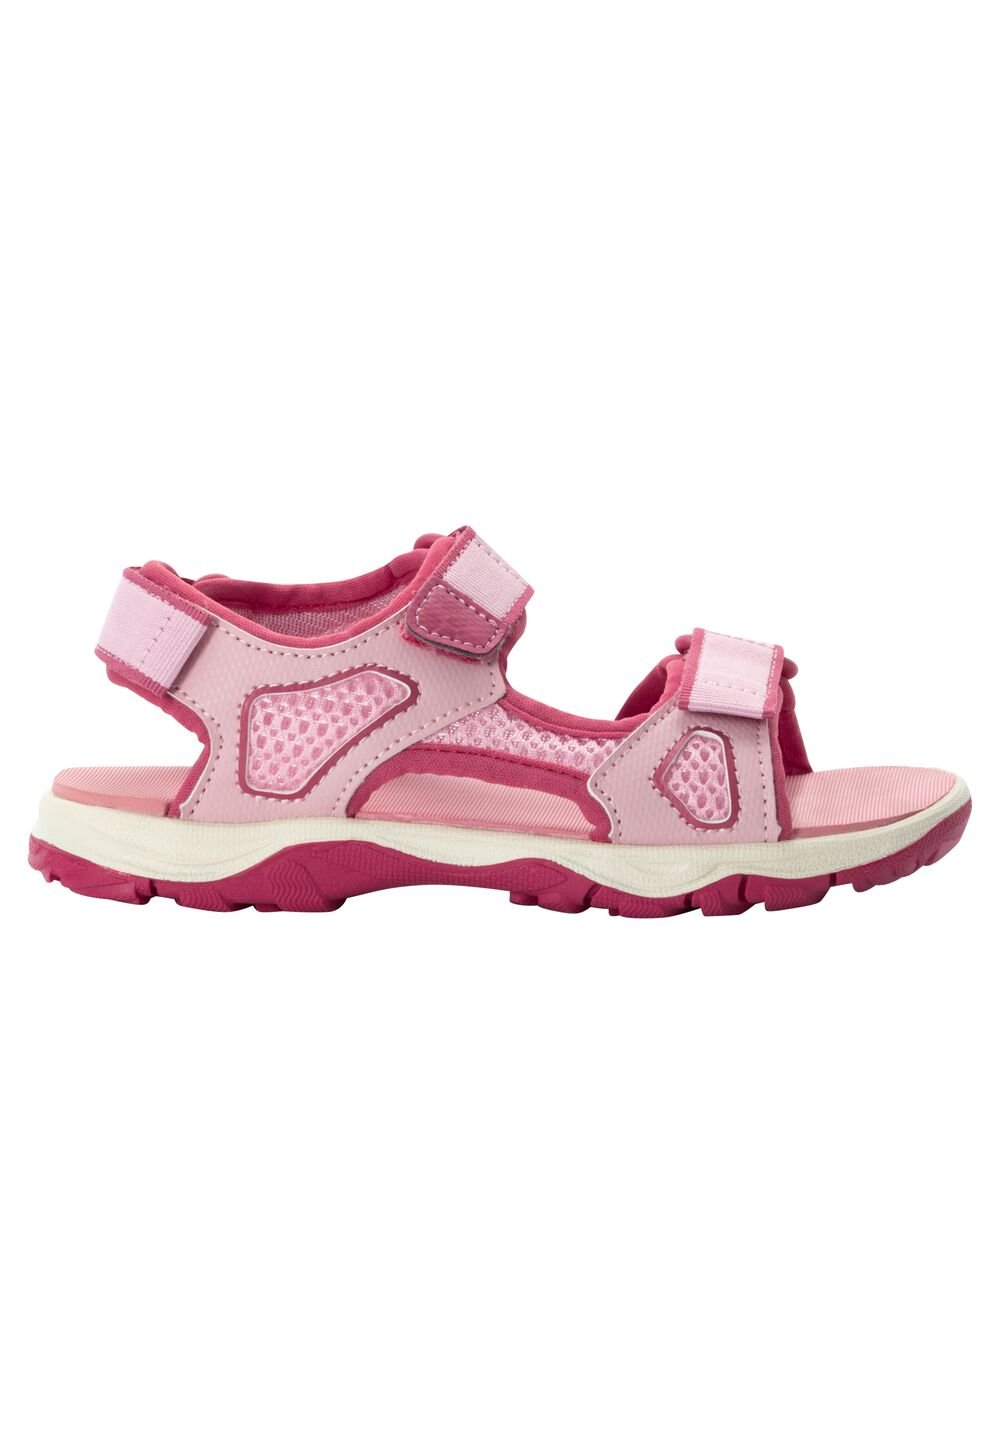 Jack Wolfskin Taraco Beach Sandal Kids Kinderen sandalen 36 soft pink soft pink